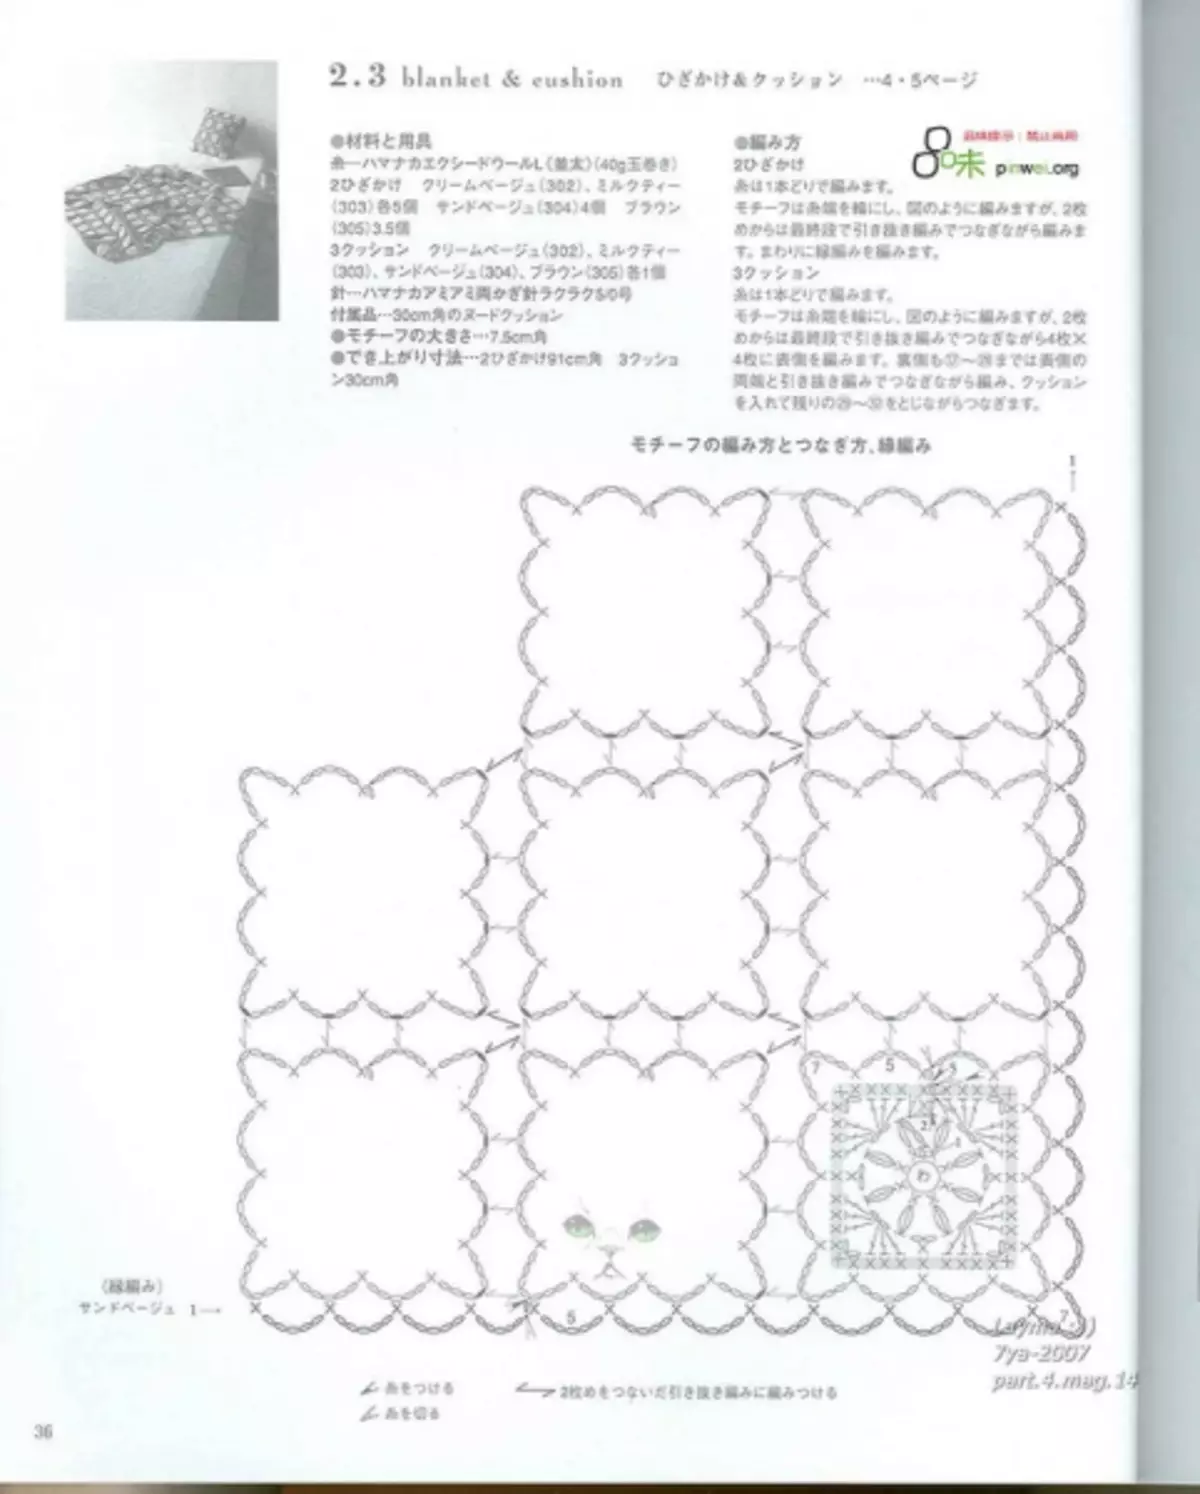 Kroket. Japaneseapon magazineurnaly